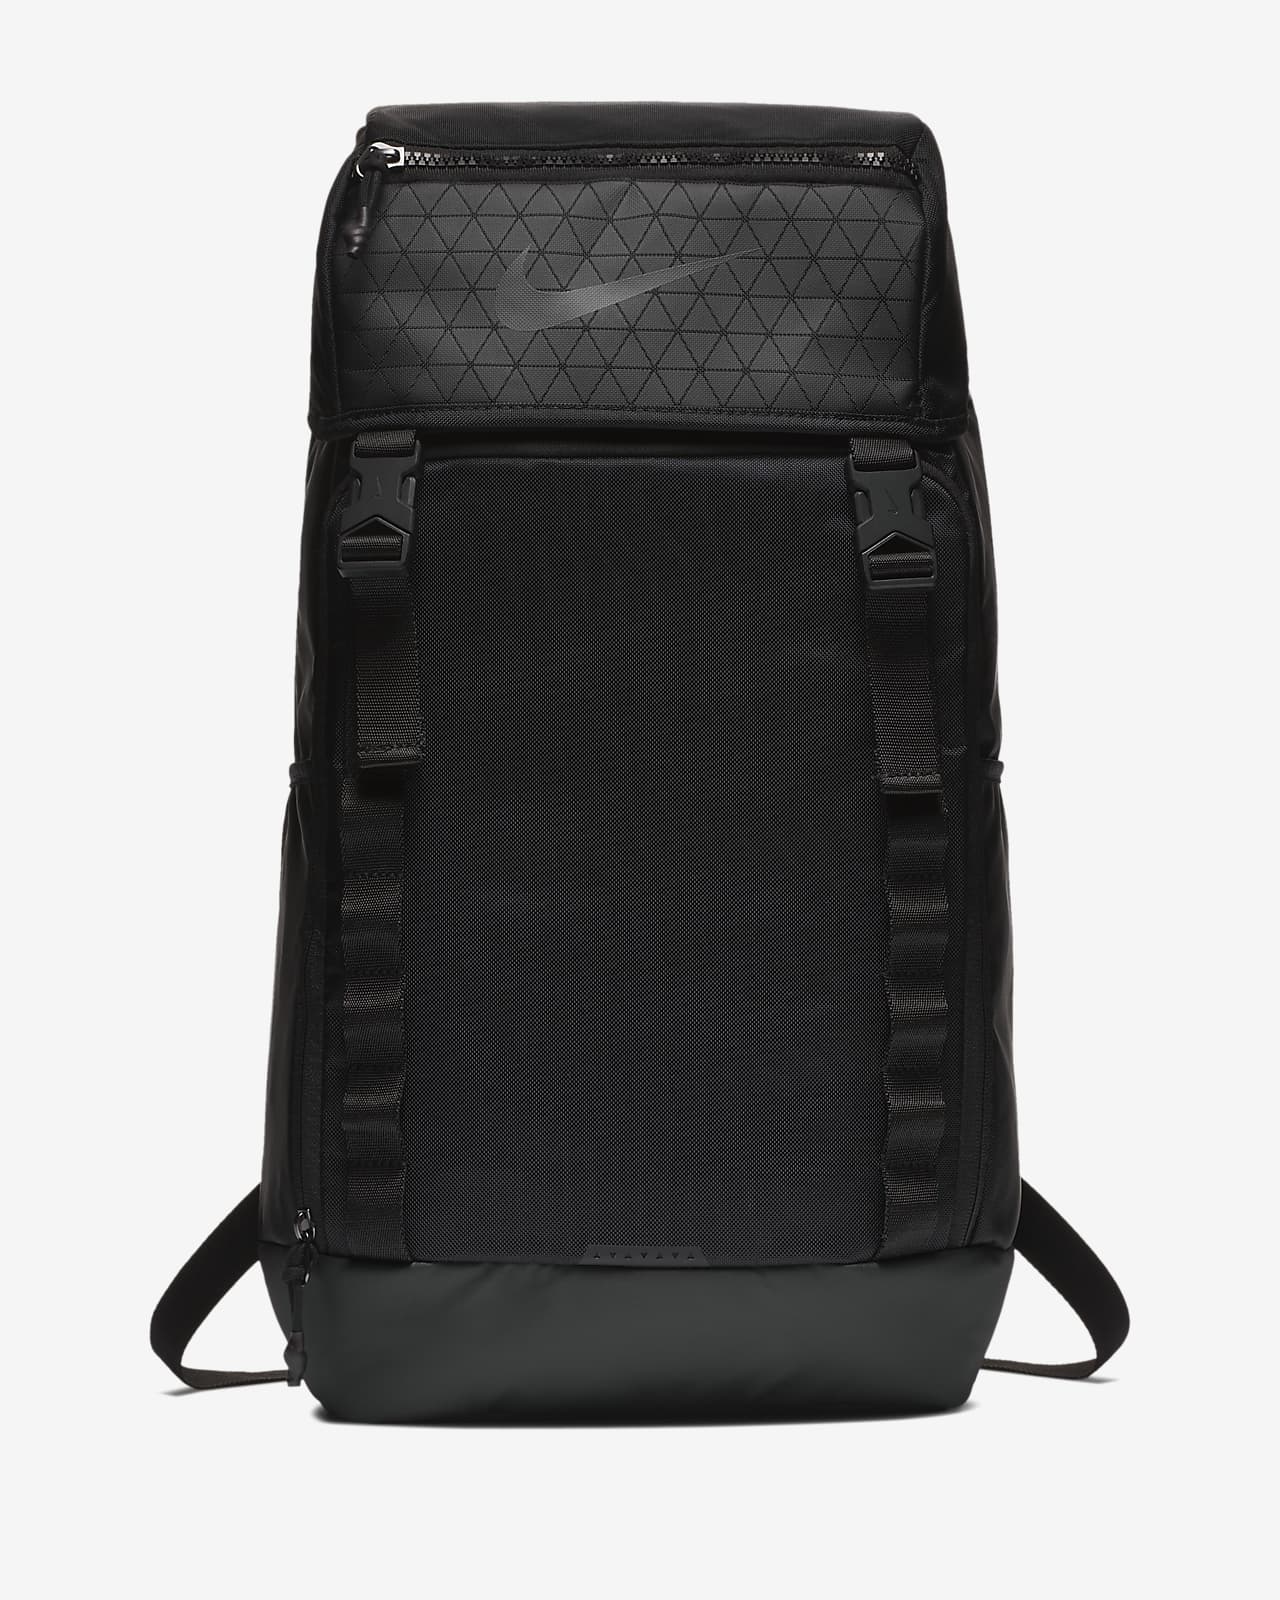 nike vapor speed backpack review